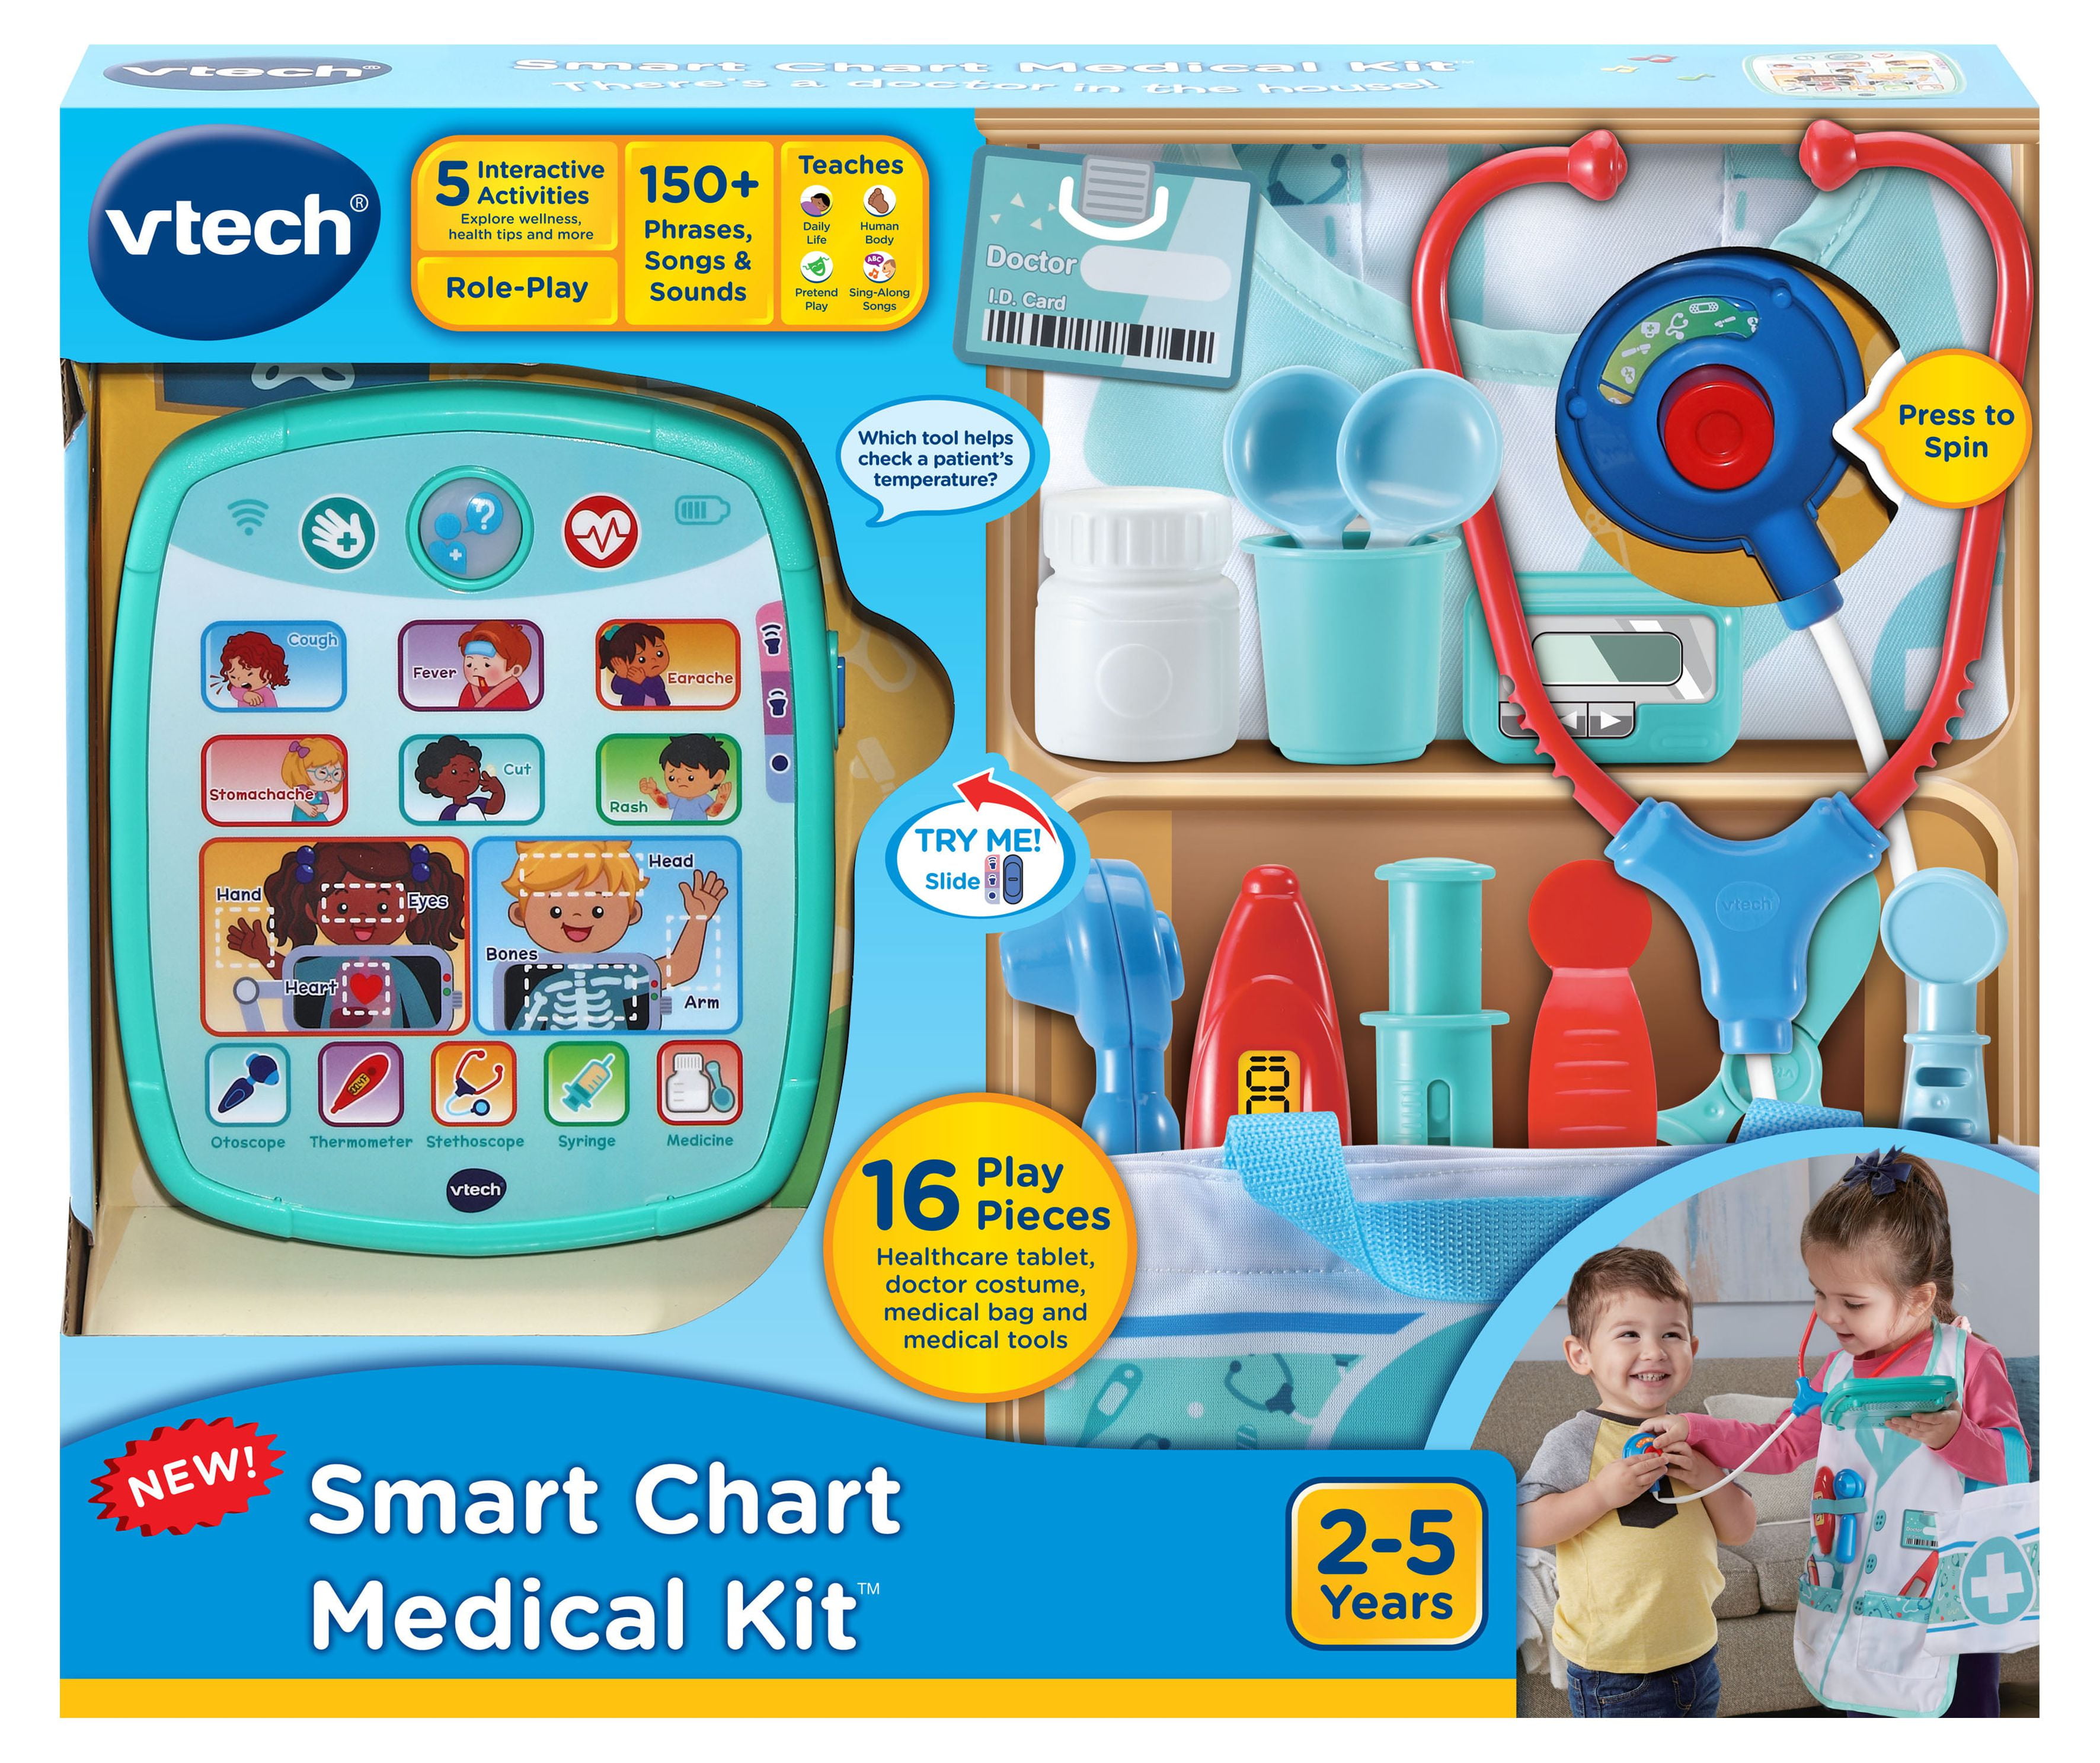 VitaKids - Digital Cartoon Thermometer - Medical Supplies - Online